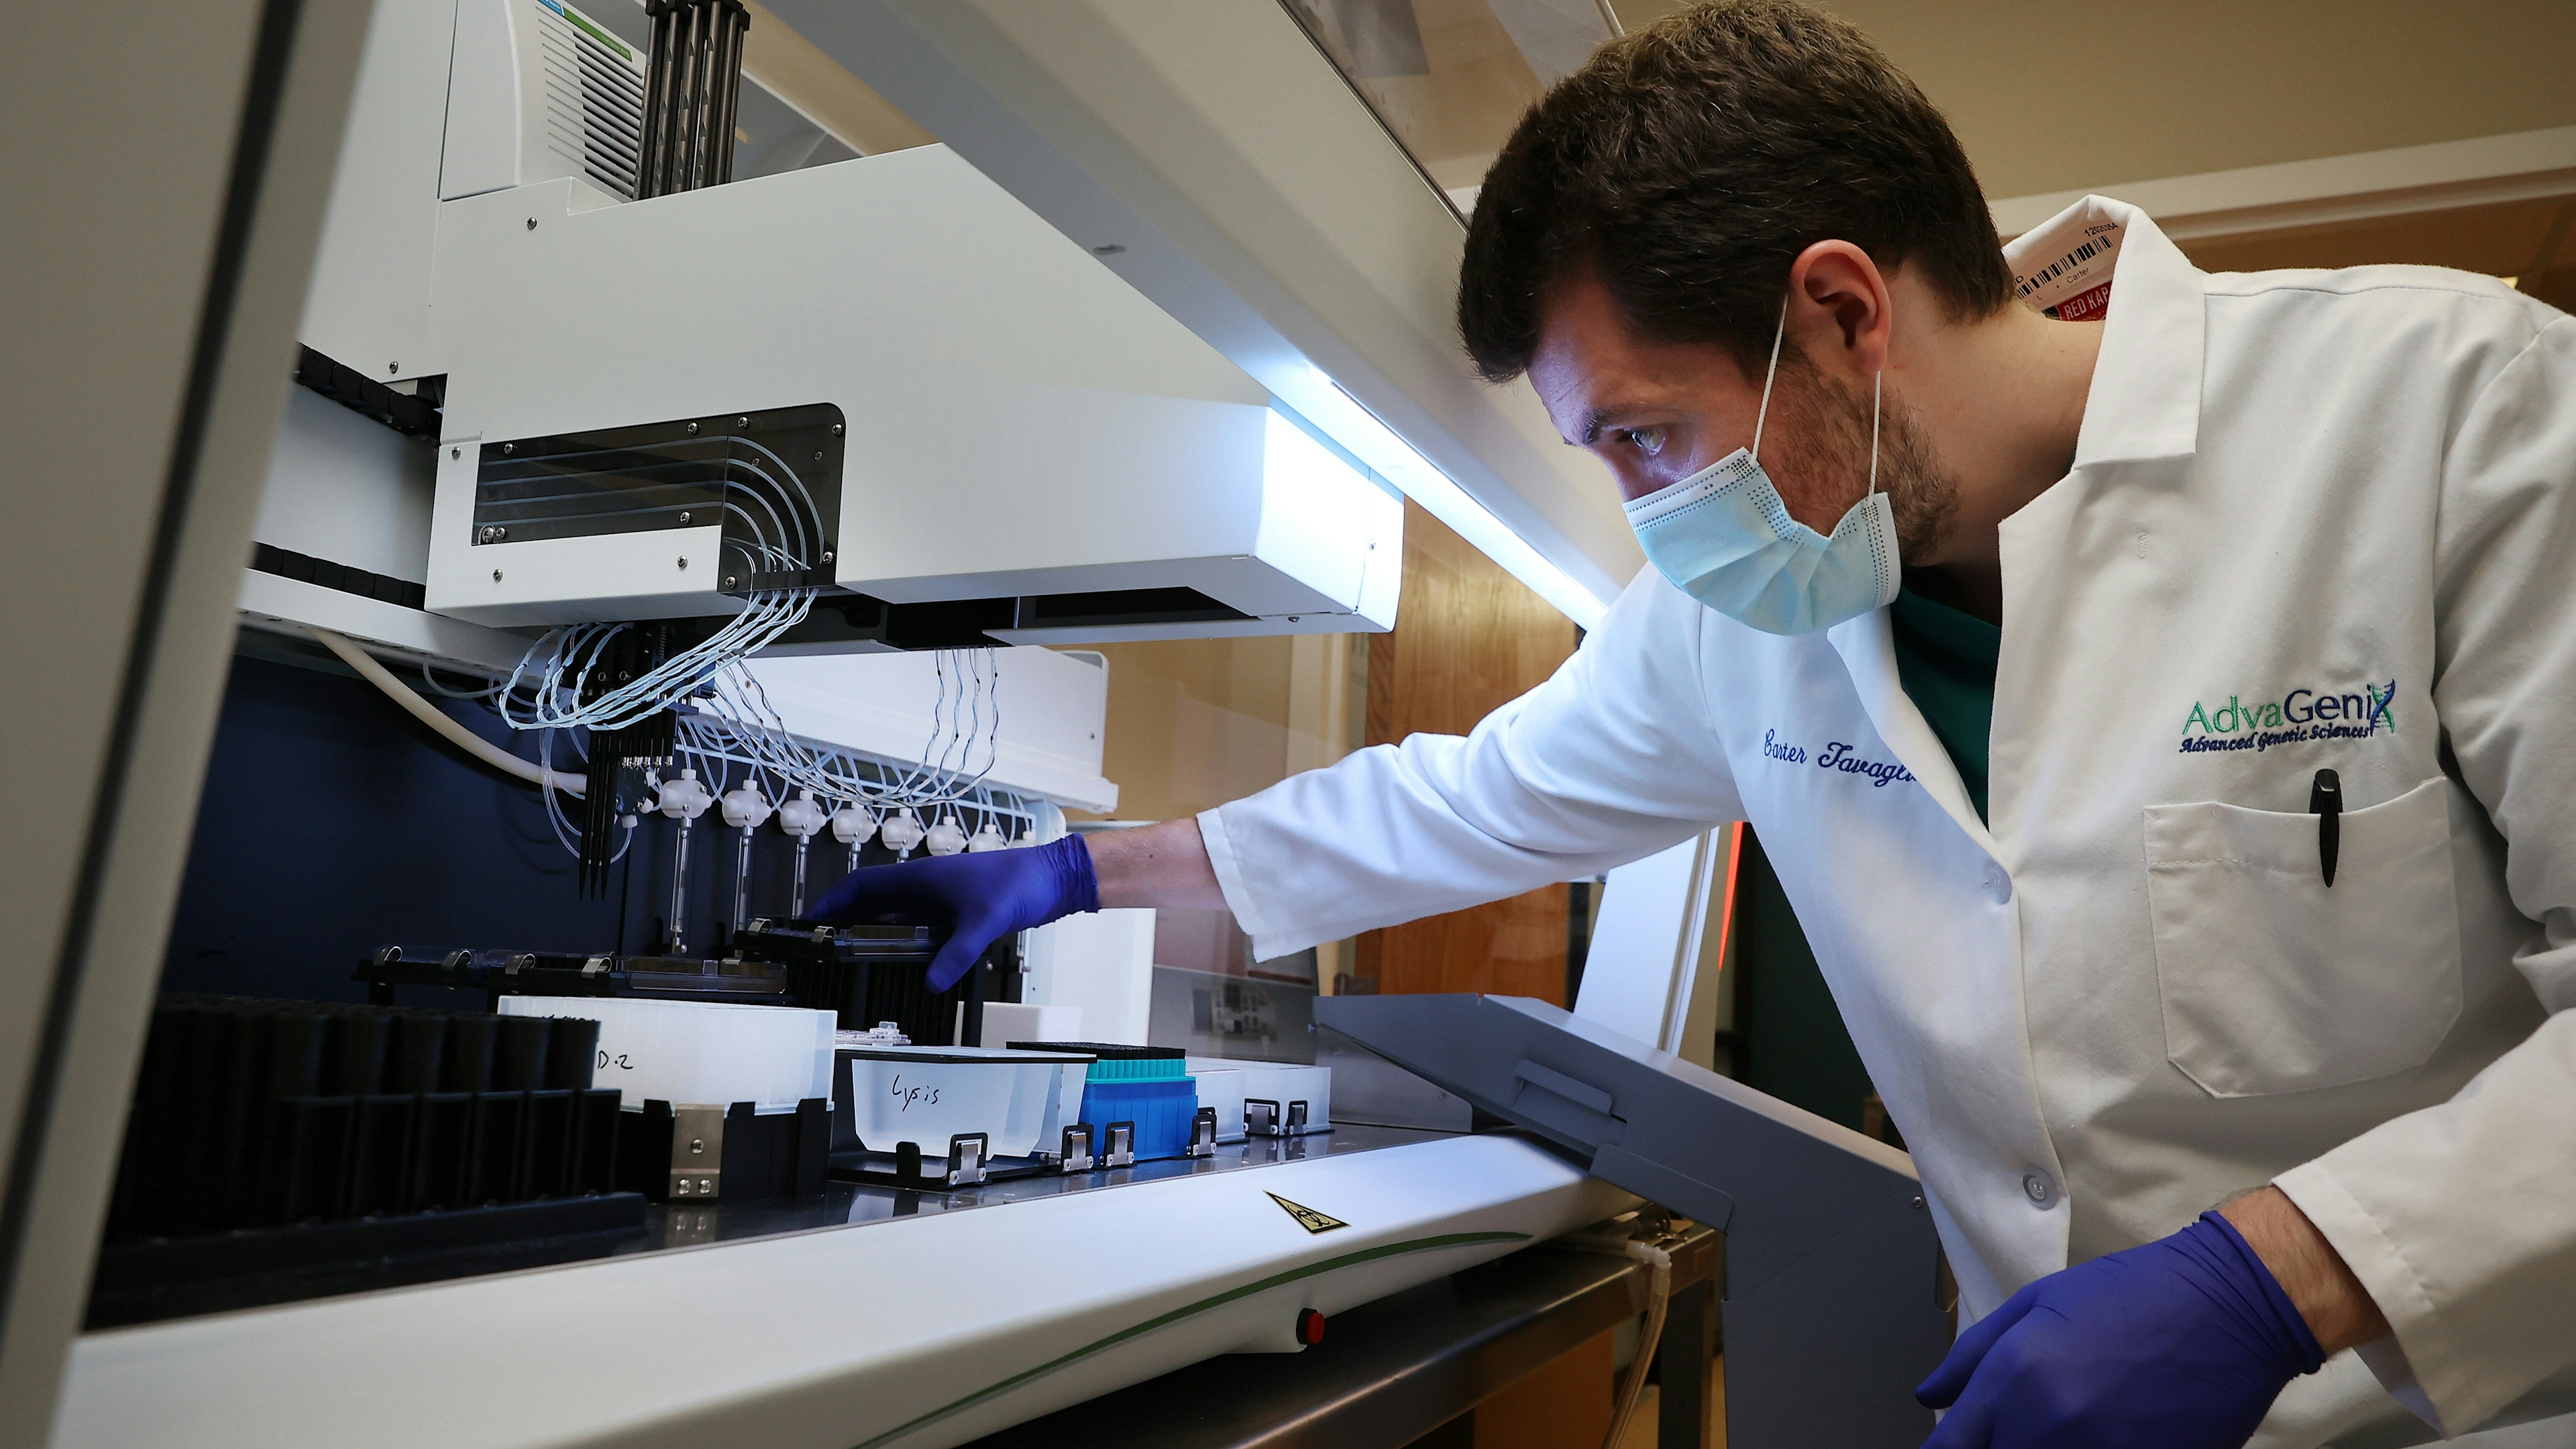 Lab Technician loads at Janus G3 automated workstation with coronavirus test samples